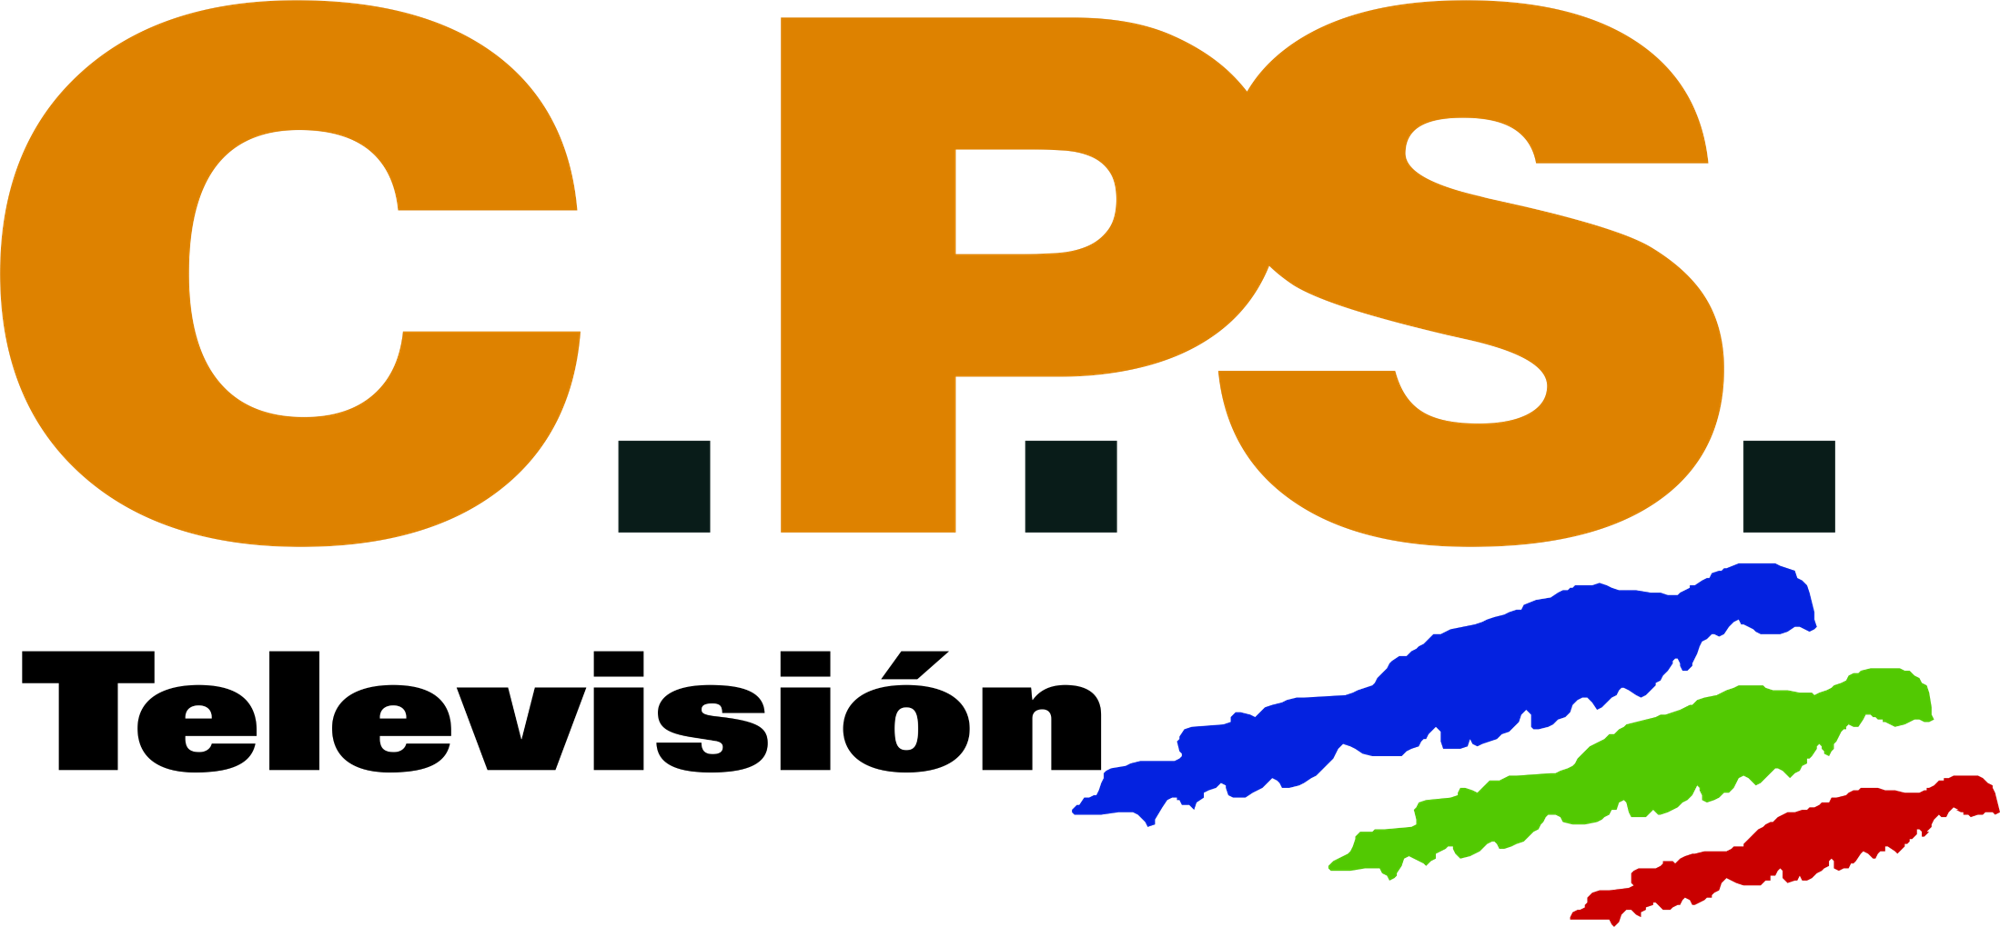 CPS letter logo design in illustration. Vector logo, calligraphy designs  for logo, Poster, Invitation, etc. 23178922 Vector Art at Vecteezy